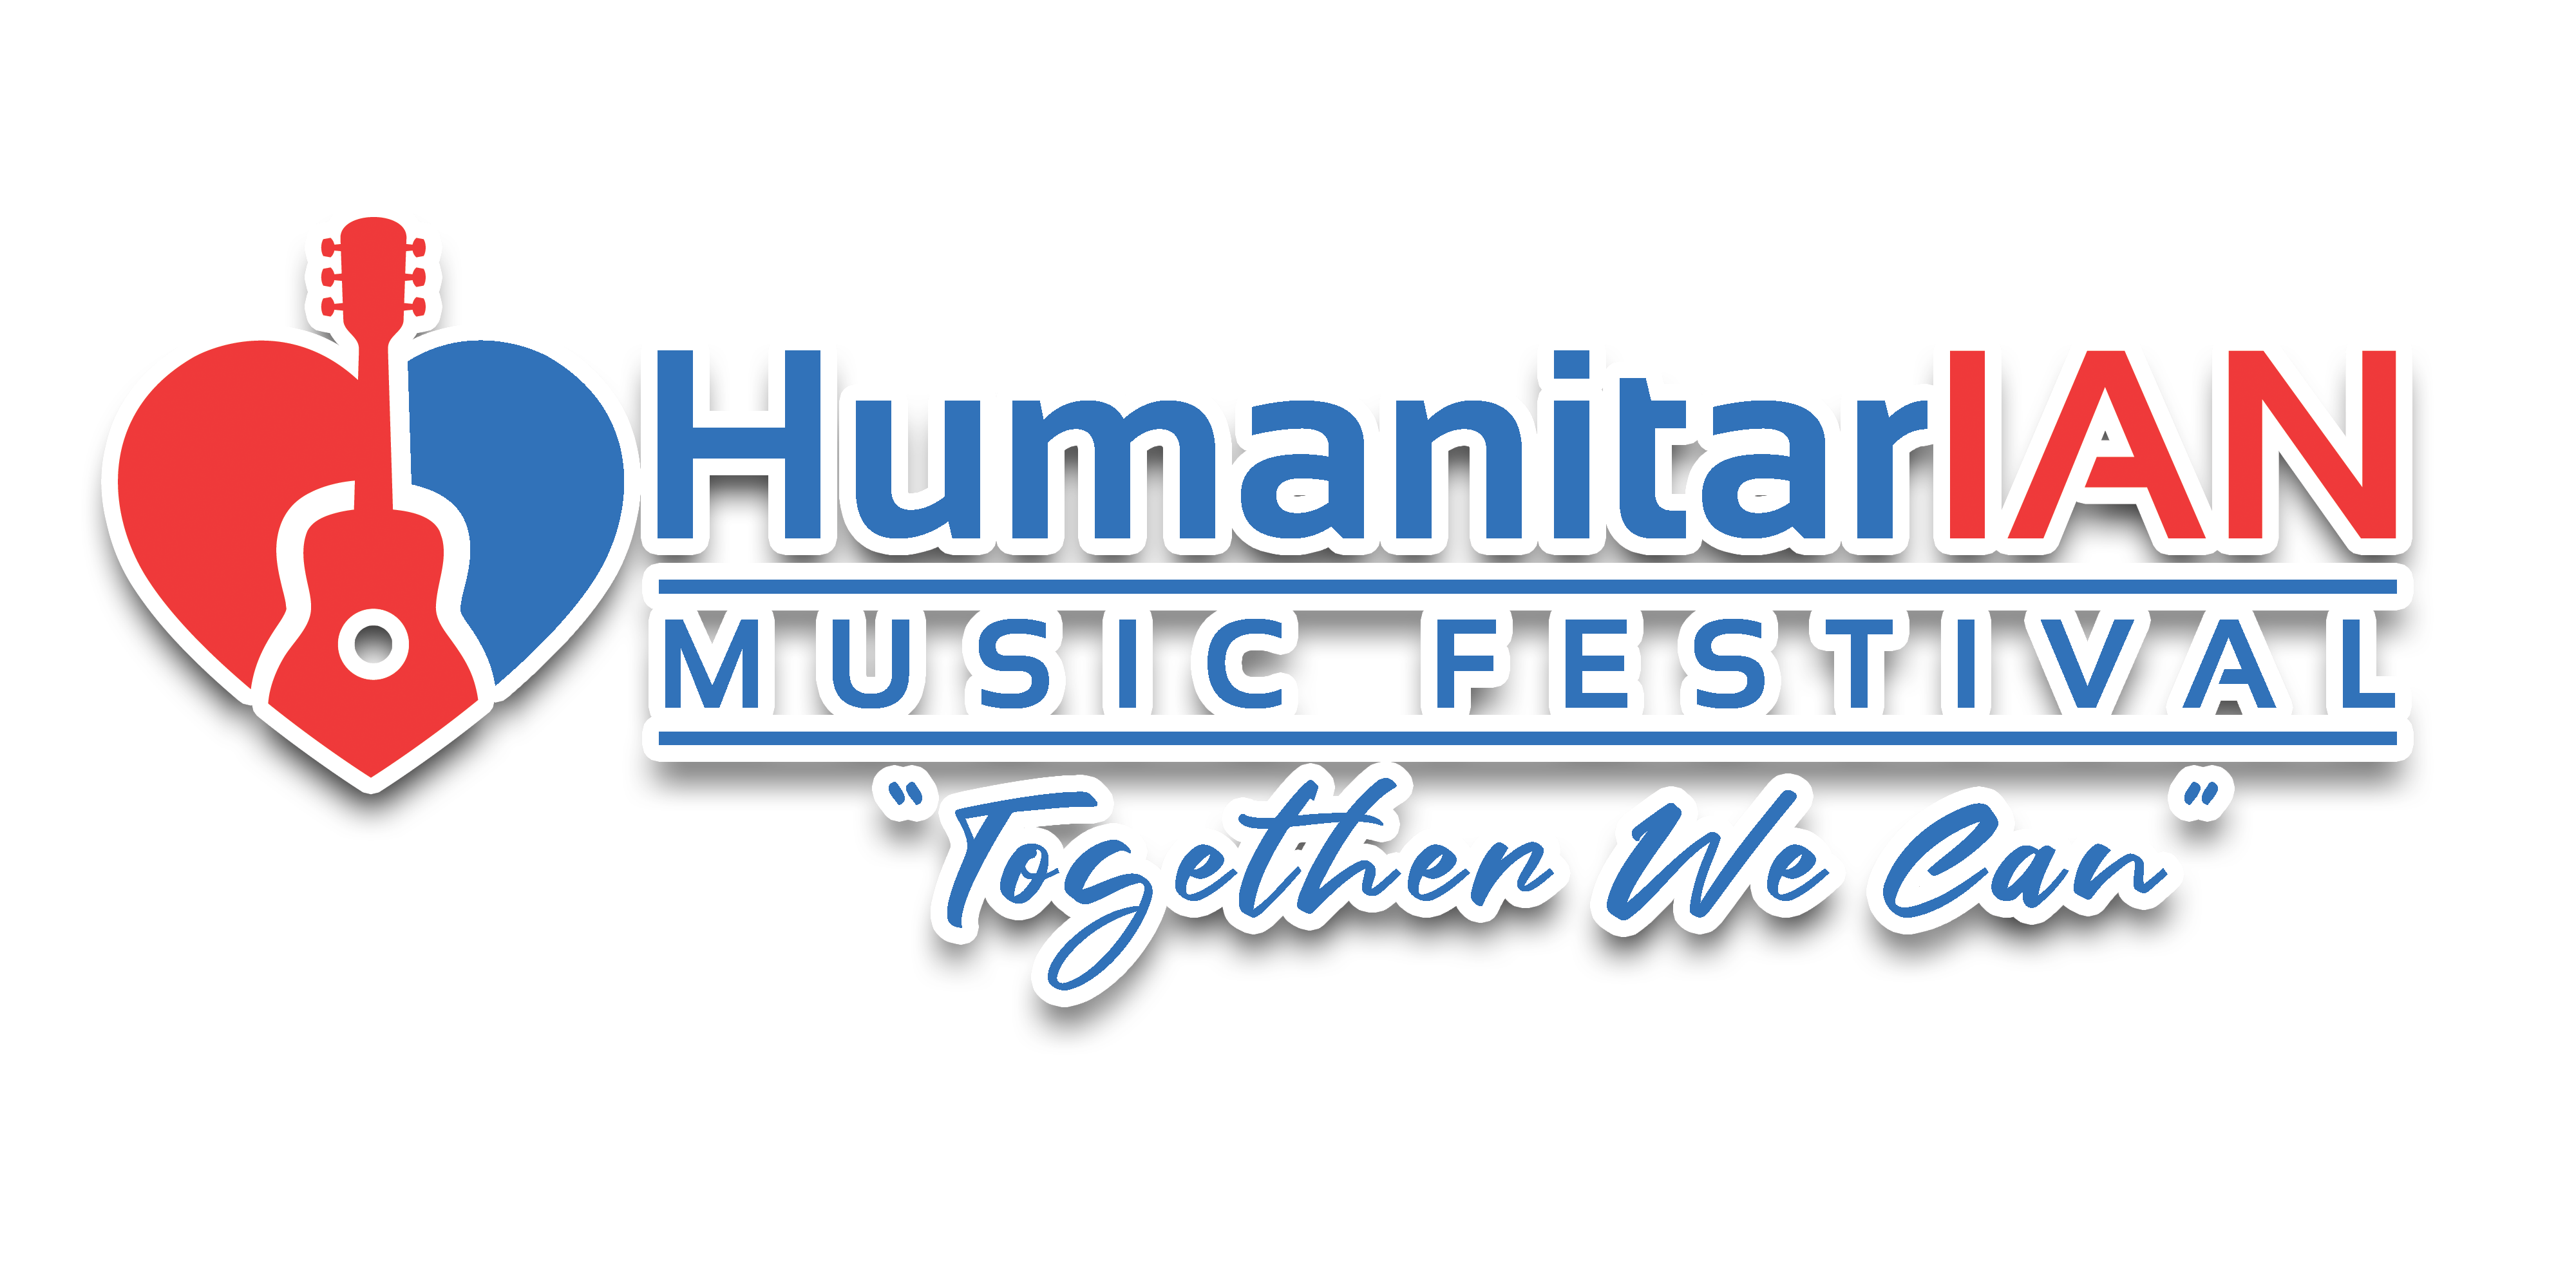 HumanitarIAN Music Festival